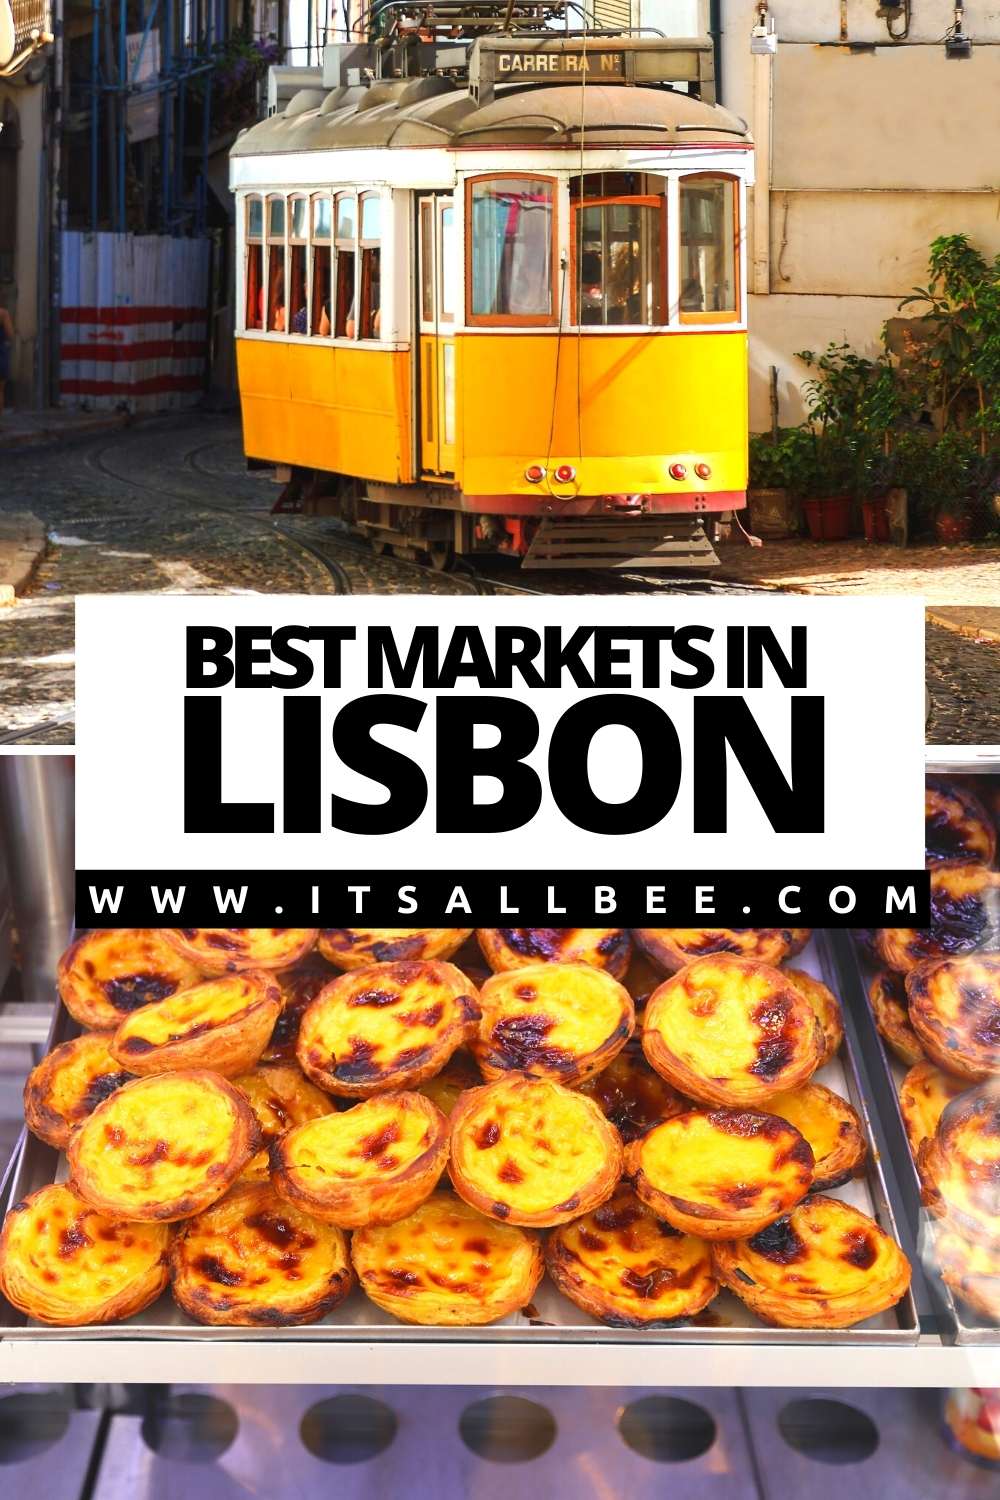  Lisbon Market Food | Time Out Market Lisbon | Flea Markets In Lisbon | Lisbon Portugal Markets | Lisbon Things To Do | Lisbon Travel Guide